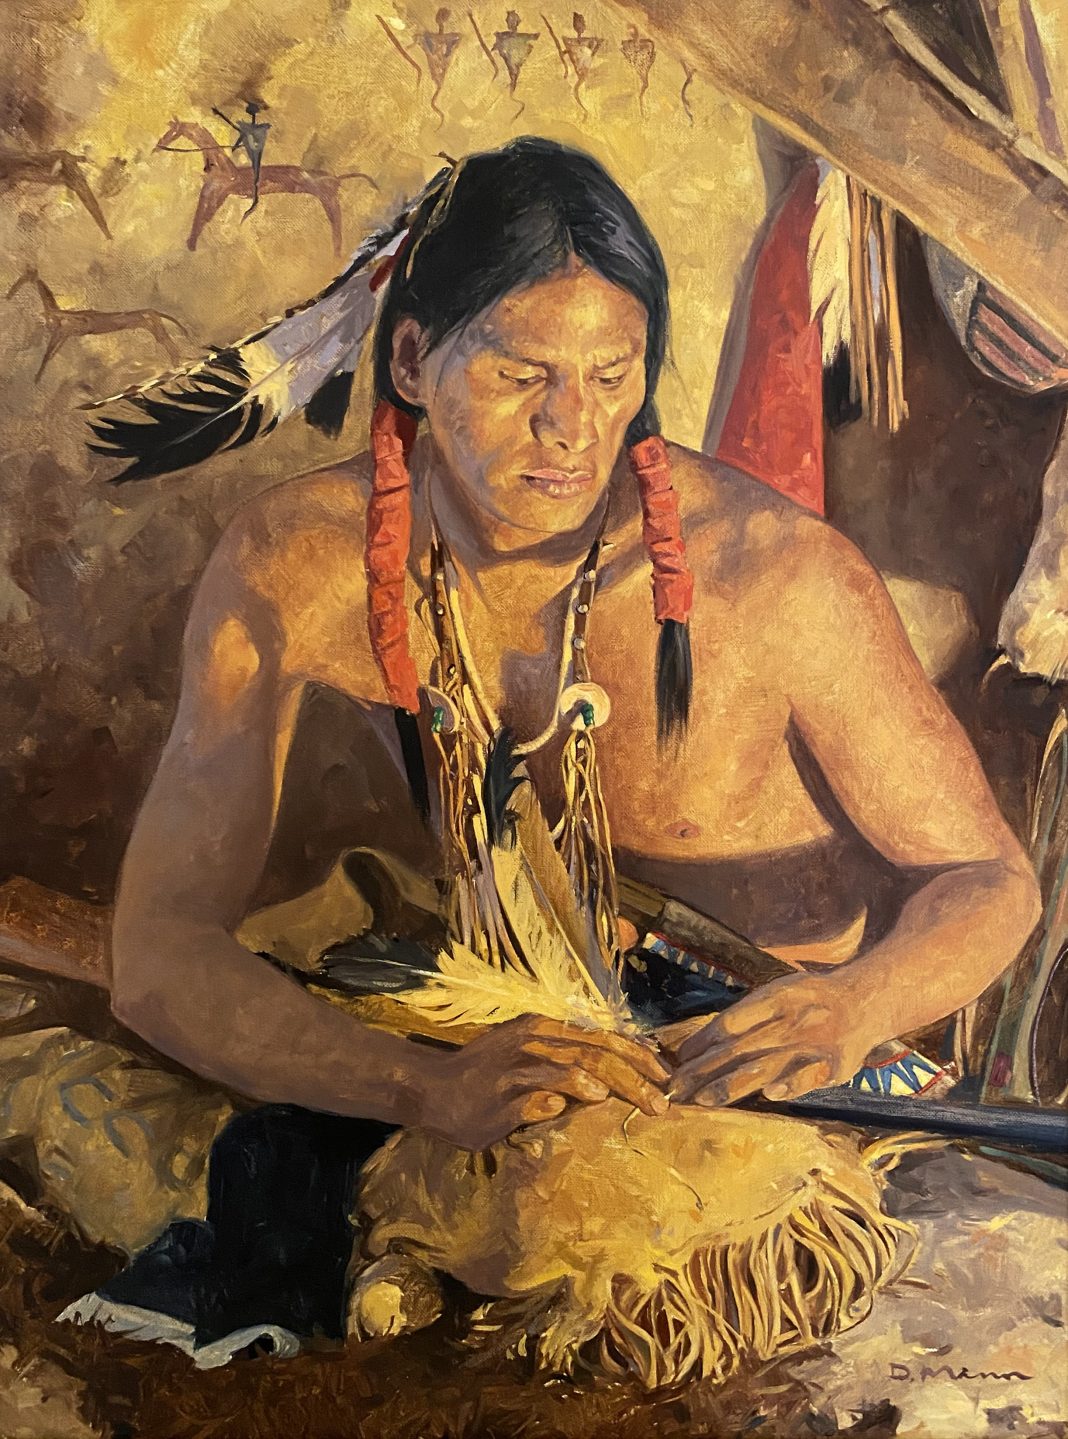 David Mann Medicine Feathers Native American warrior man scout elder warrior western oil painting